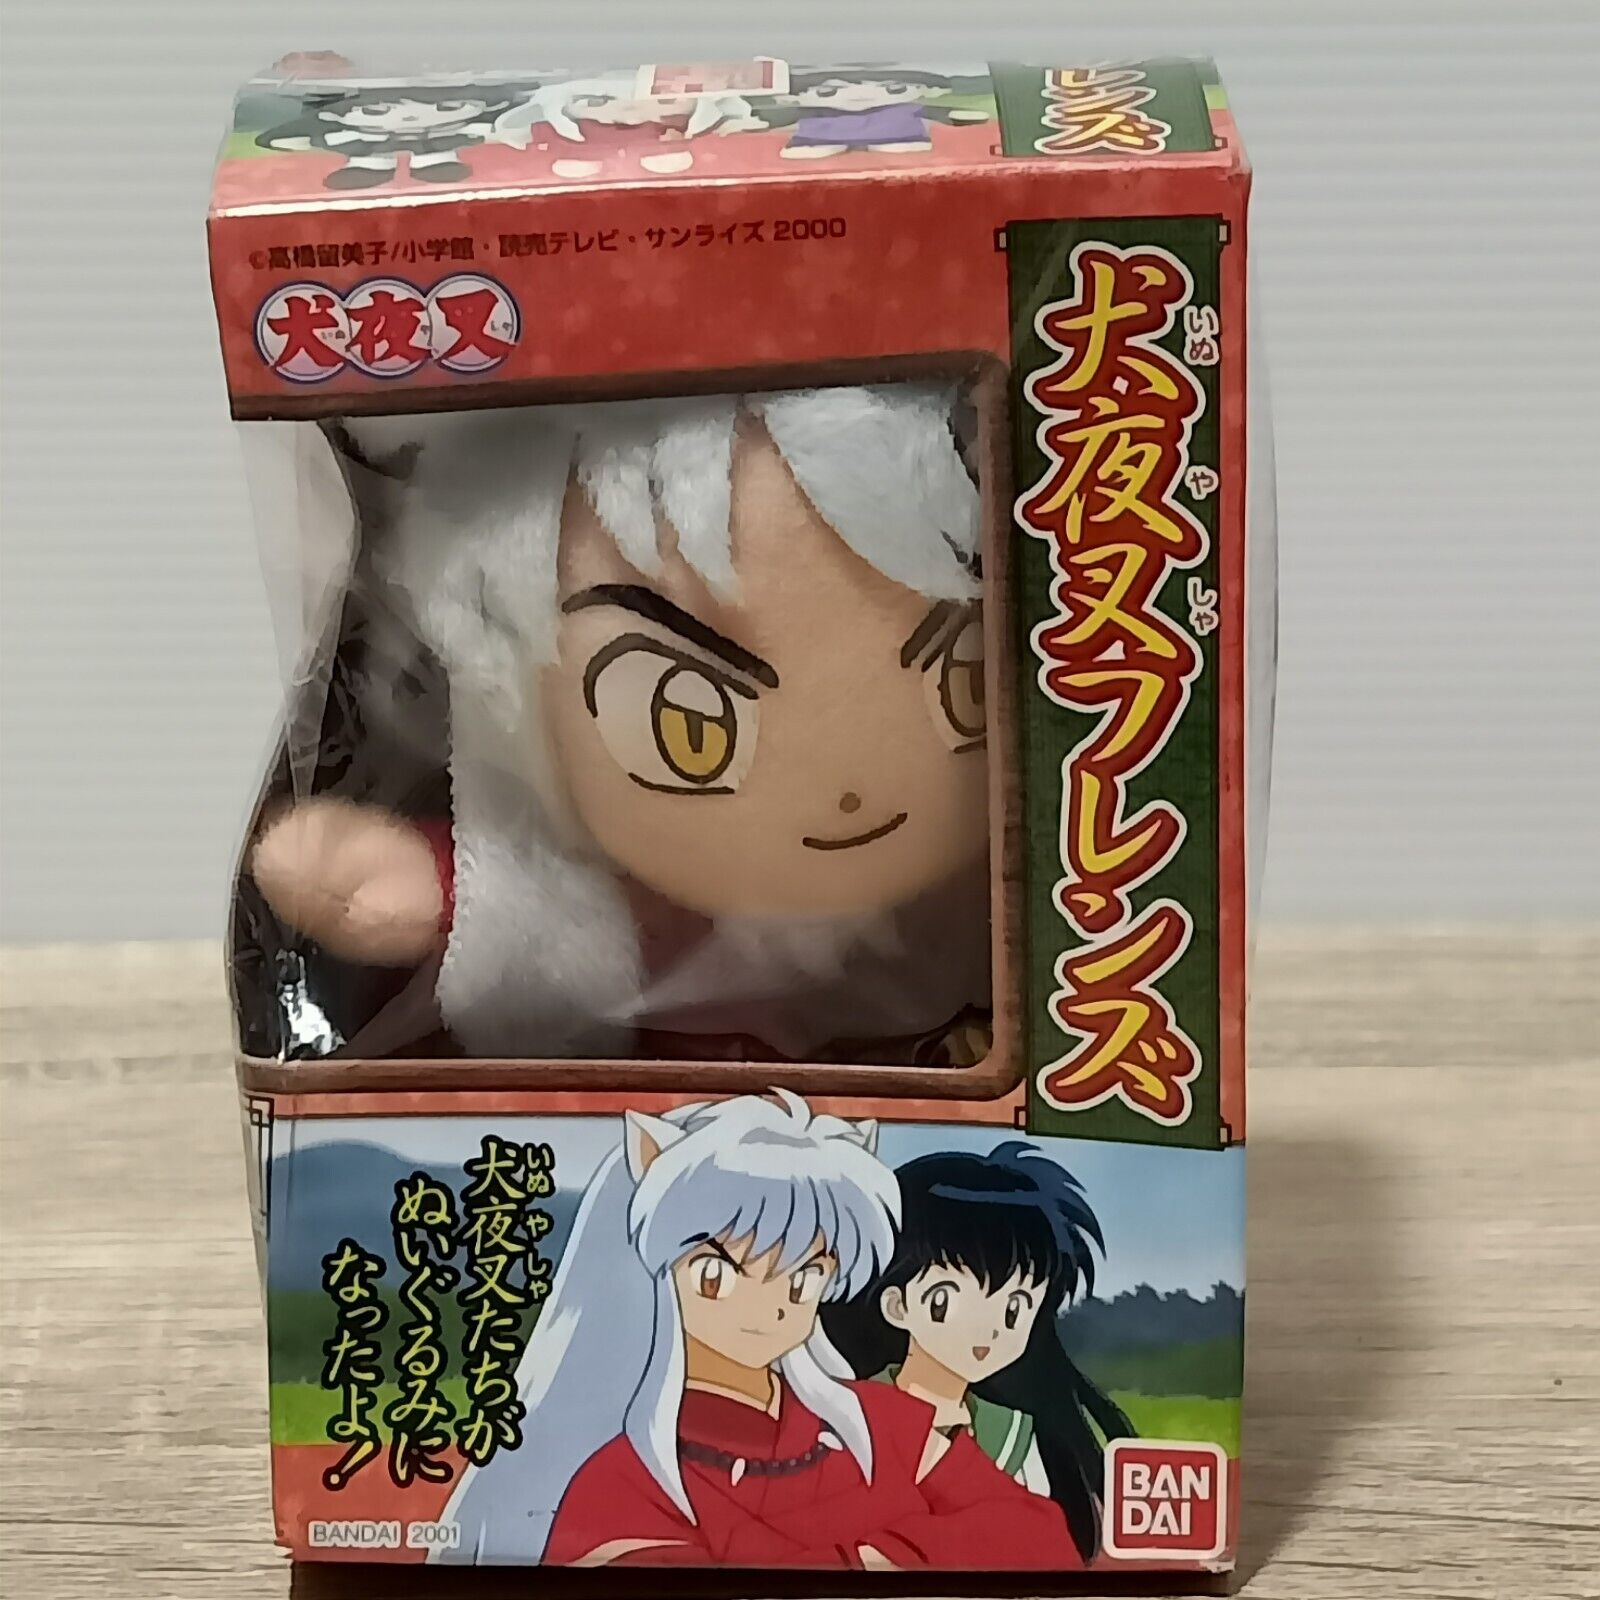 Inuyasha Inu Yasha Bandai Mini Friend Plush Strap Toy Japan Anime Manga NIB 4\